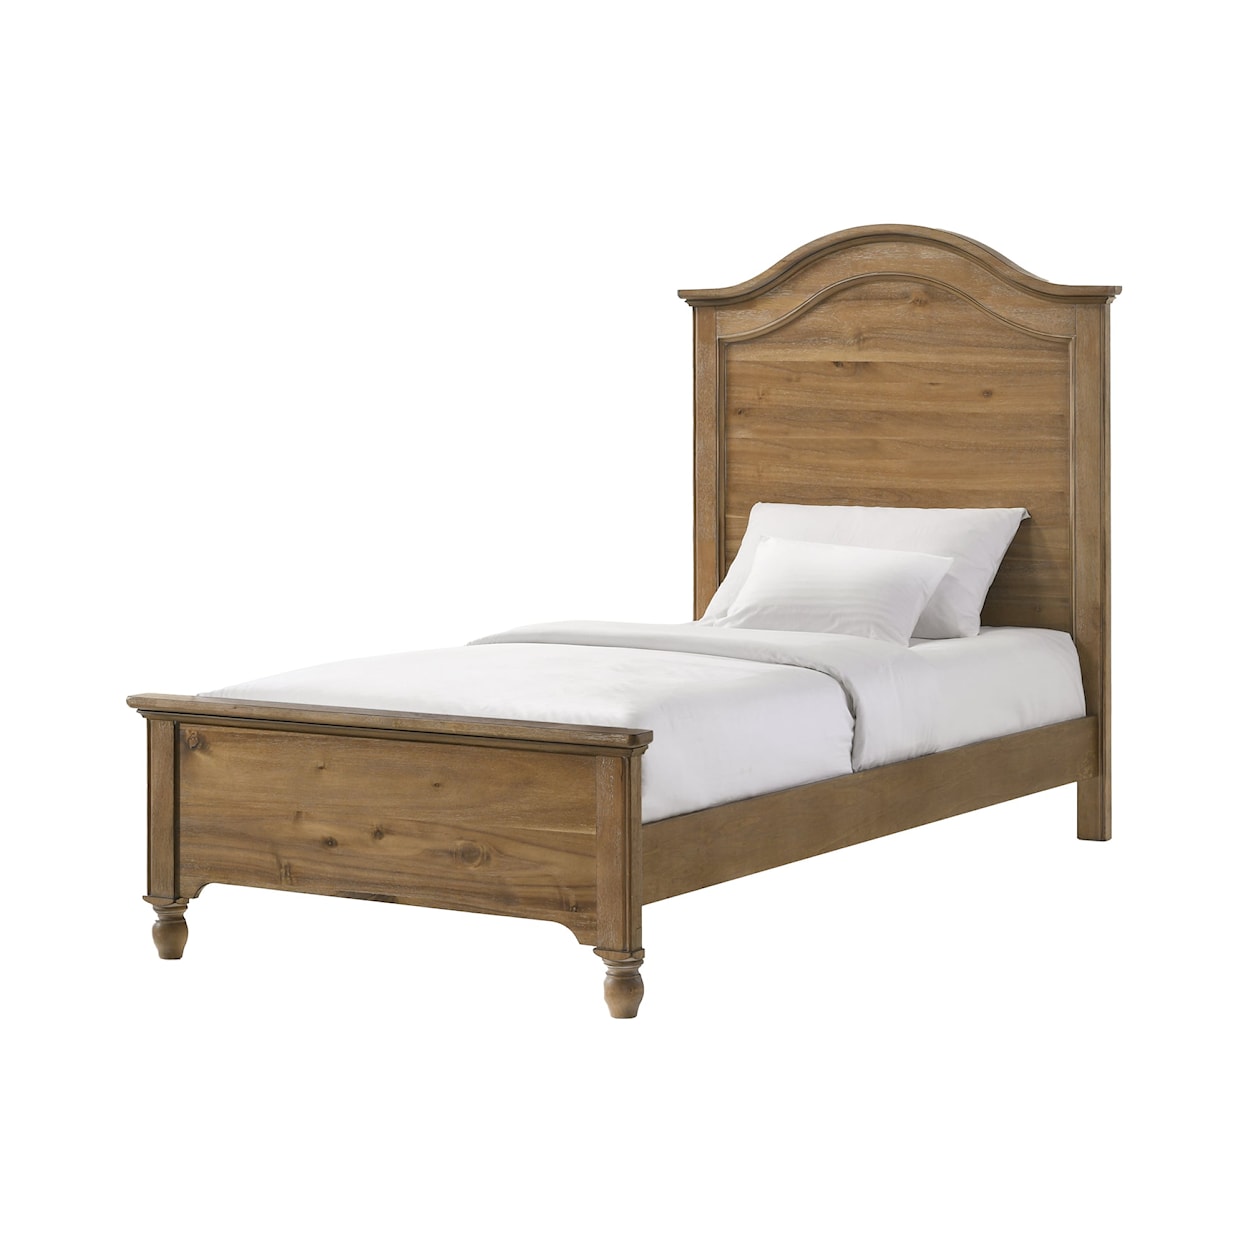 Westwood Design Highland Twin Bed